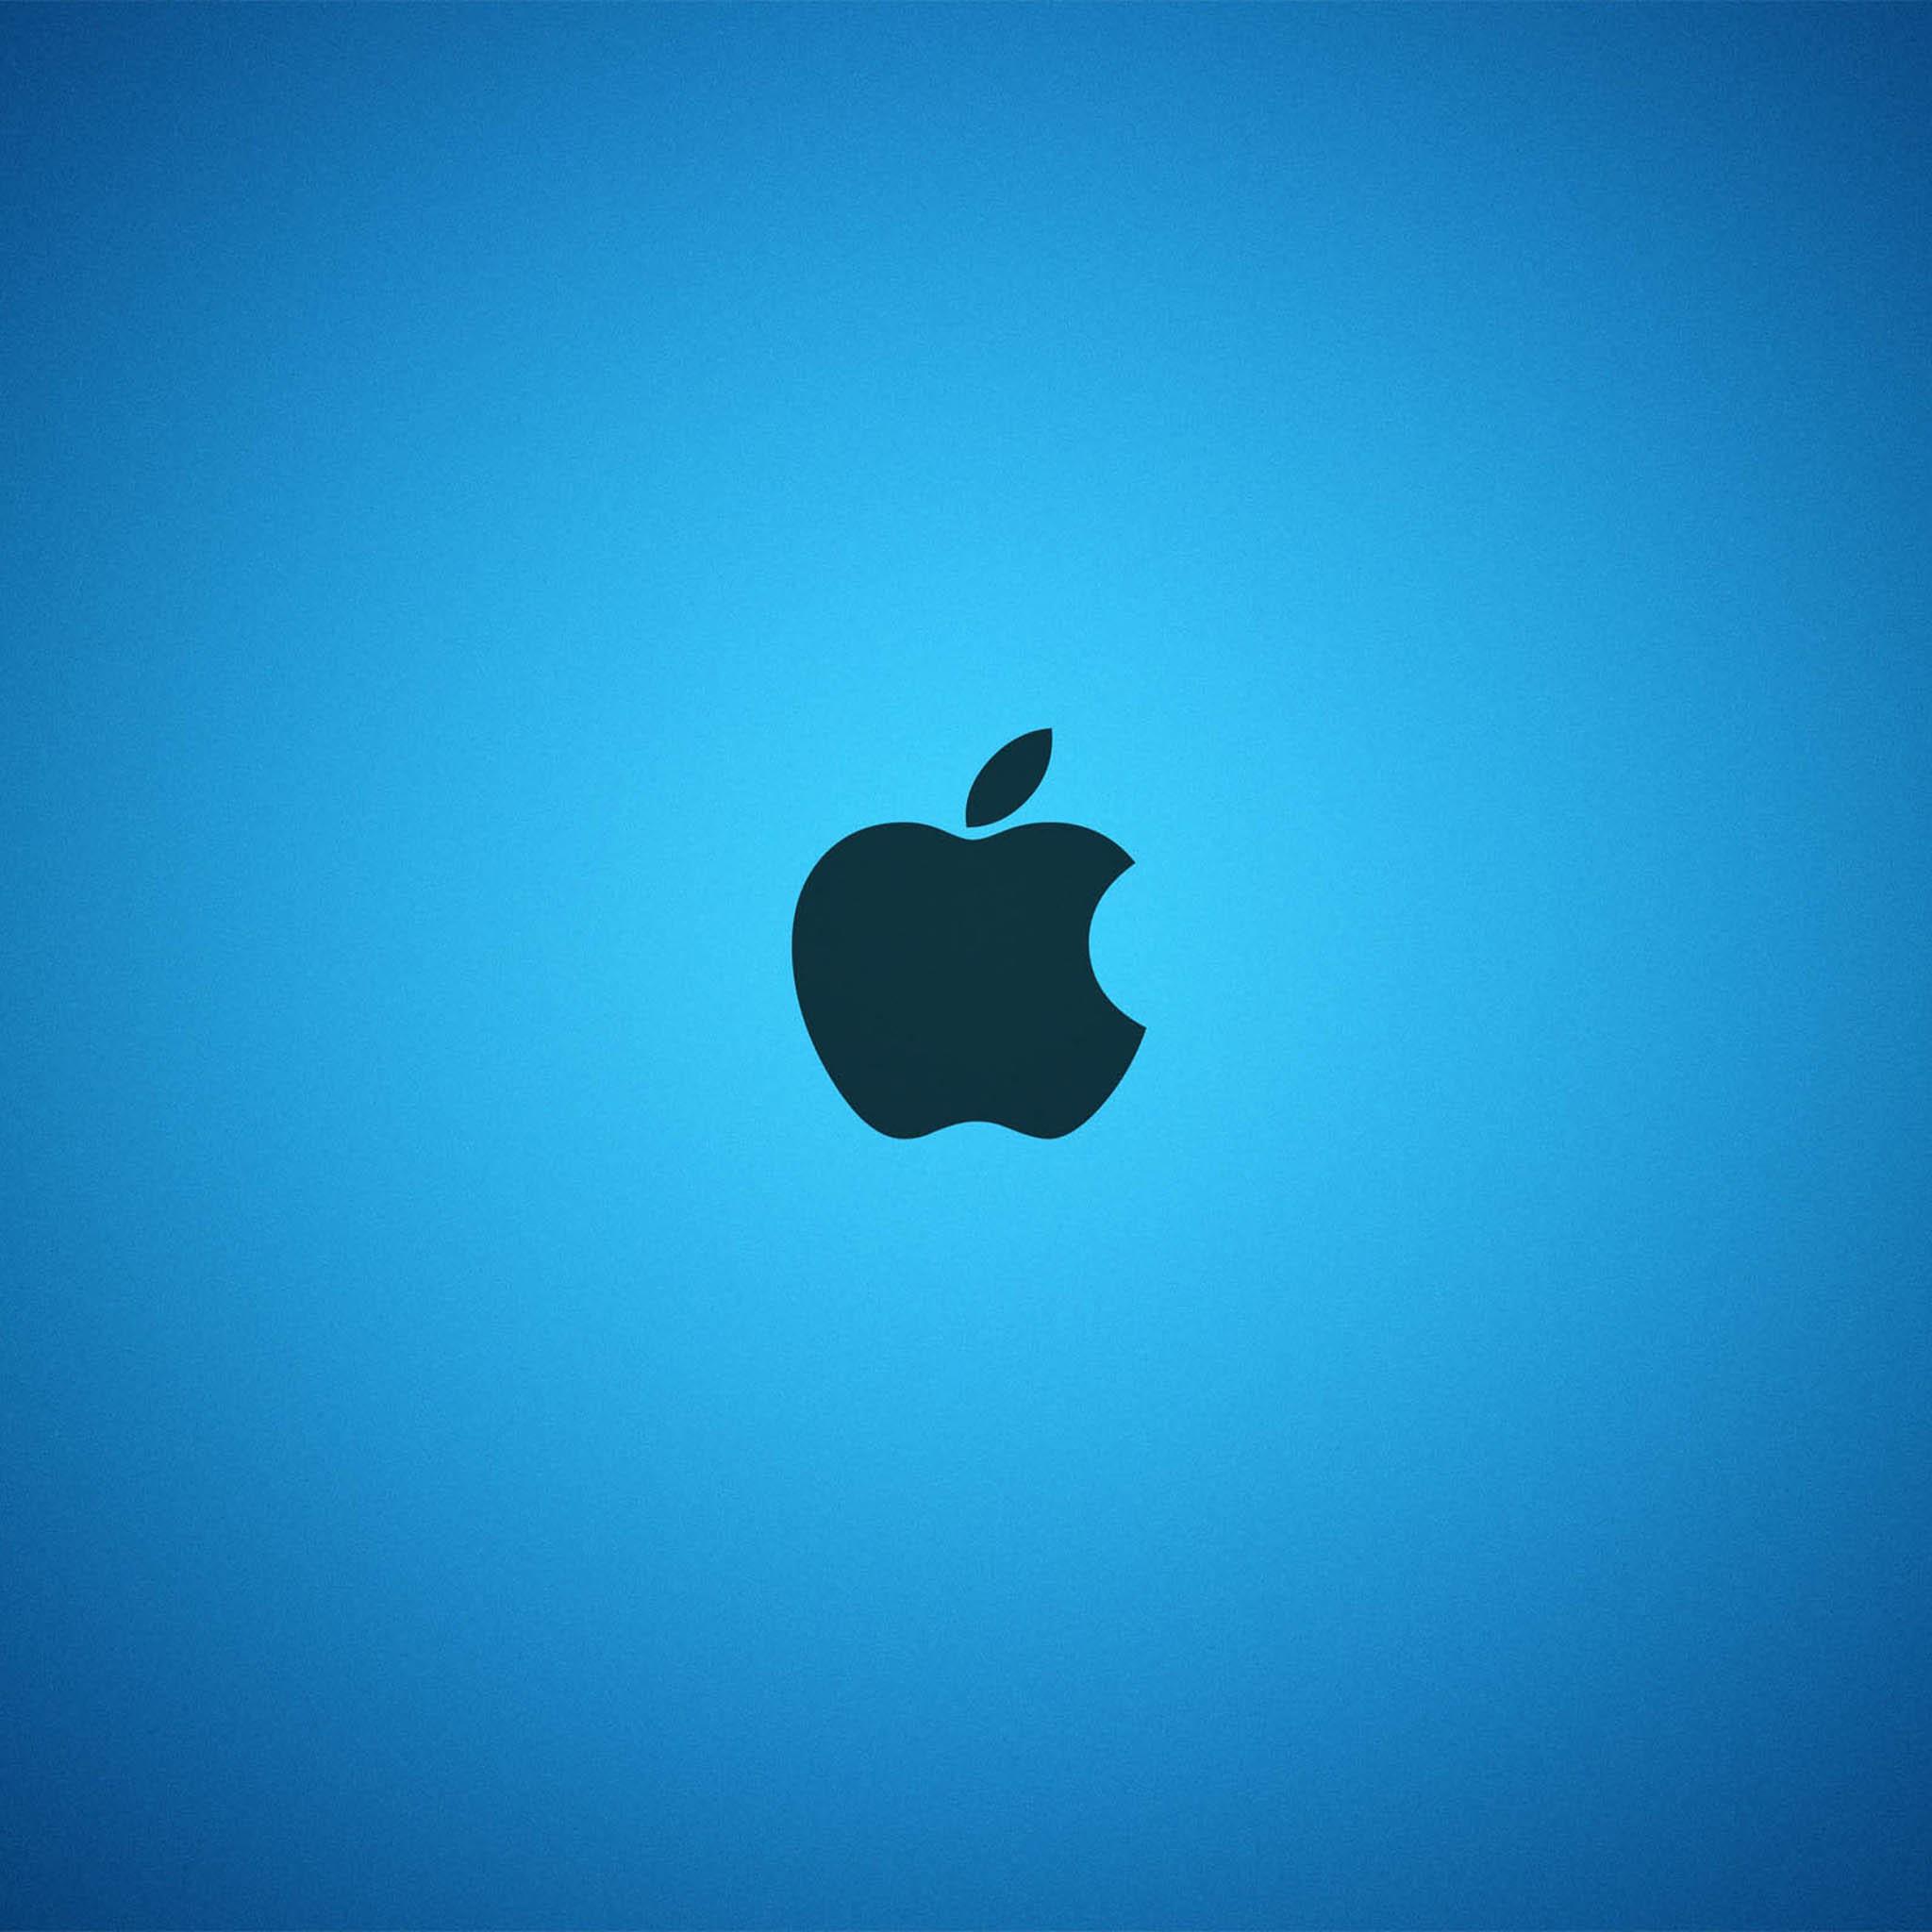 Apple Blue Logo Ipad Wallpaper Desktop Ipad タブレット壁紙ギャラリー